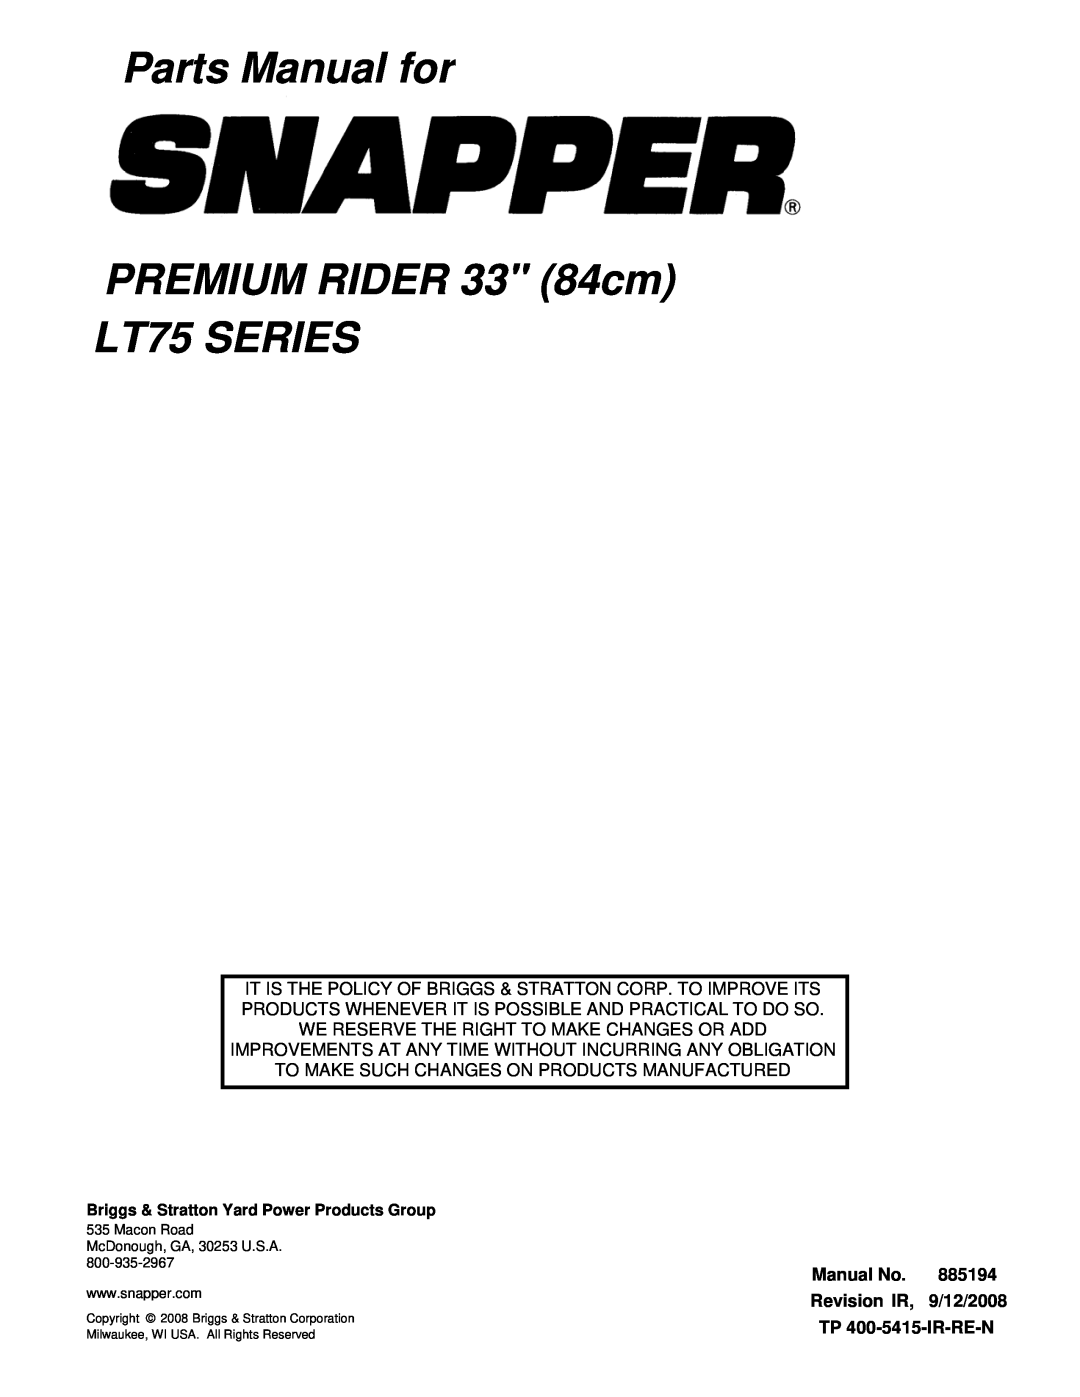 Snapper LT75 SERIES Parts Manual for PREMIUM RIDER 33 84cm, Manual No, 885194, Revision IR, 9/12/2008, TP 400-5415-IR-RE-N 